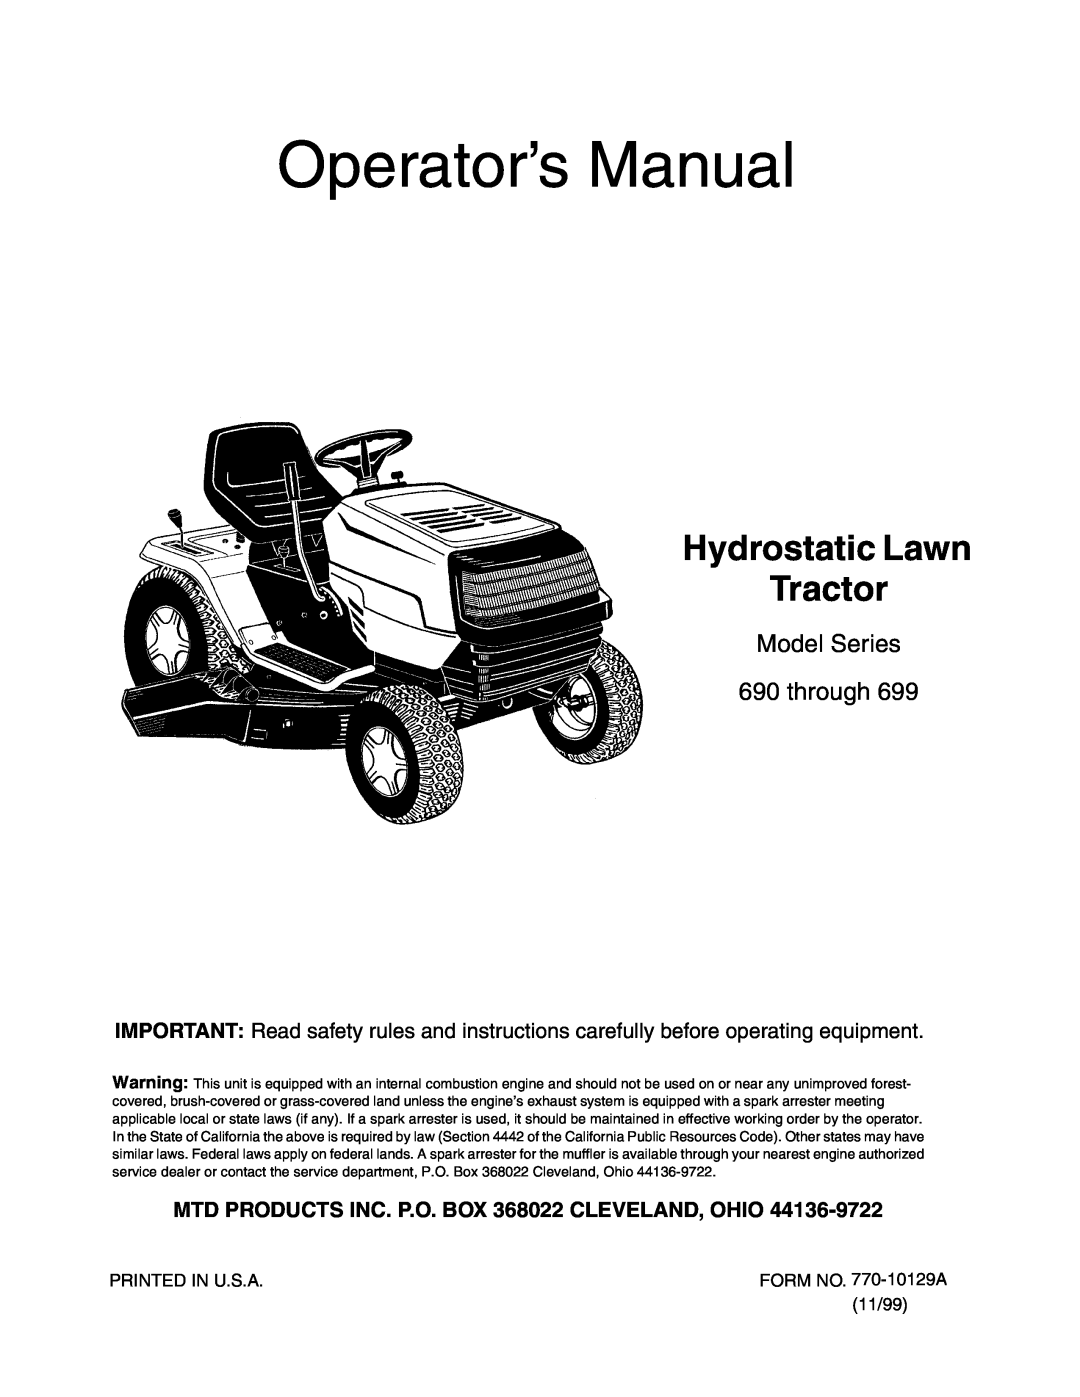 MTD 690 through 699 manual Operator’s Manual, Hydrostatic Lawn Tractor, Model Series 690 through 